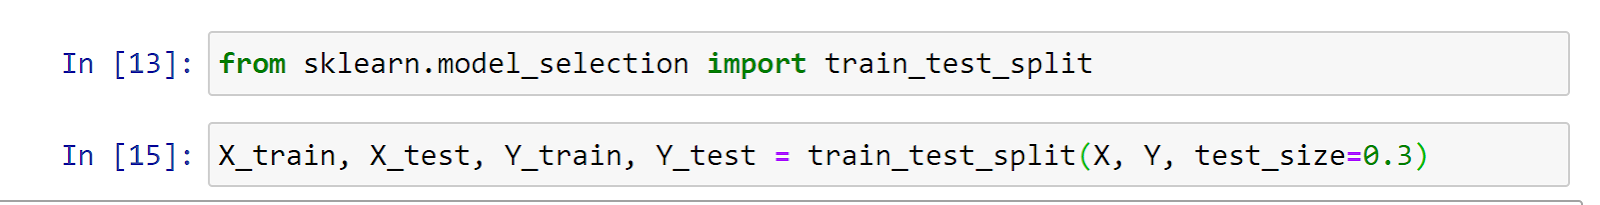 Import train test split